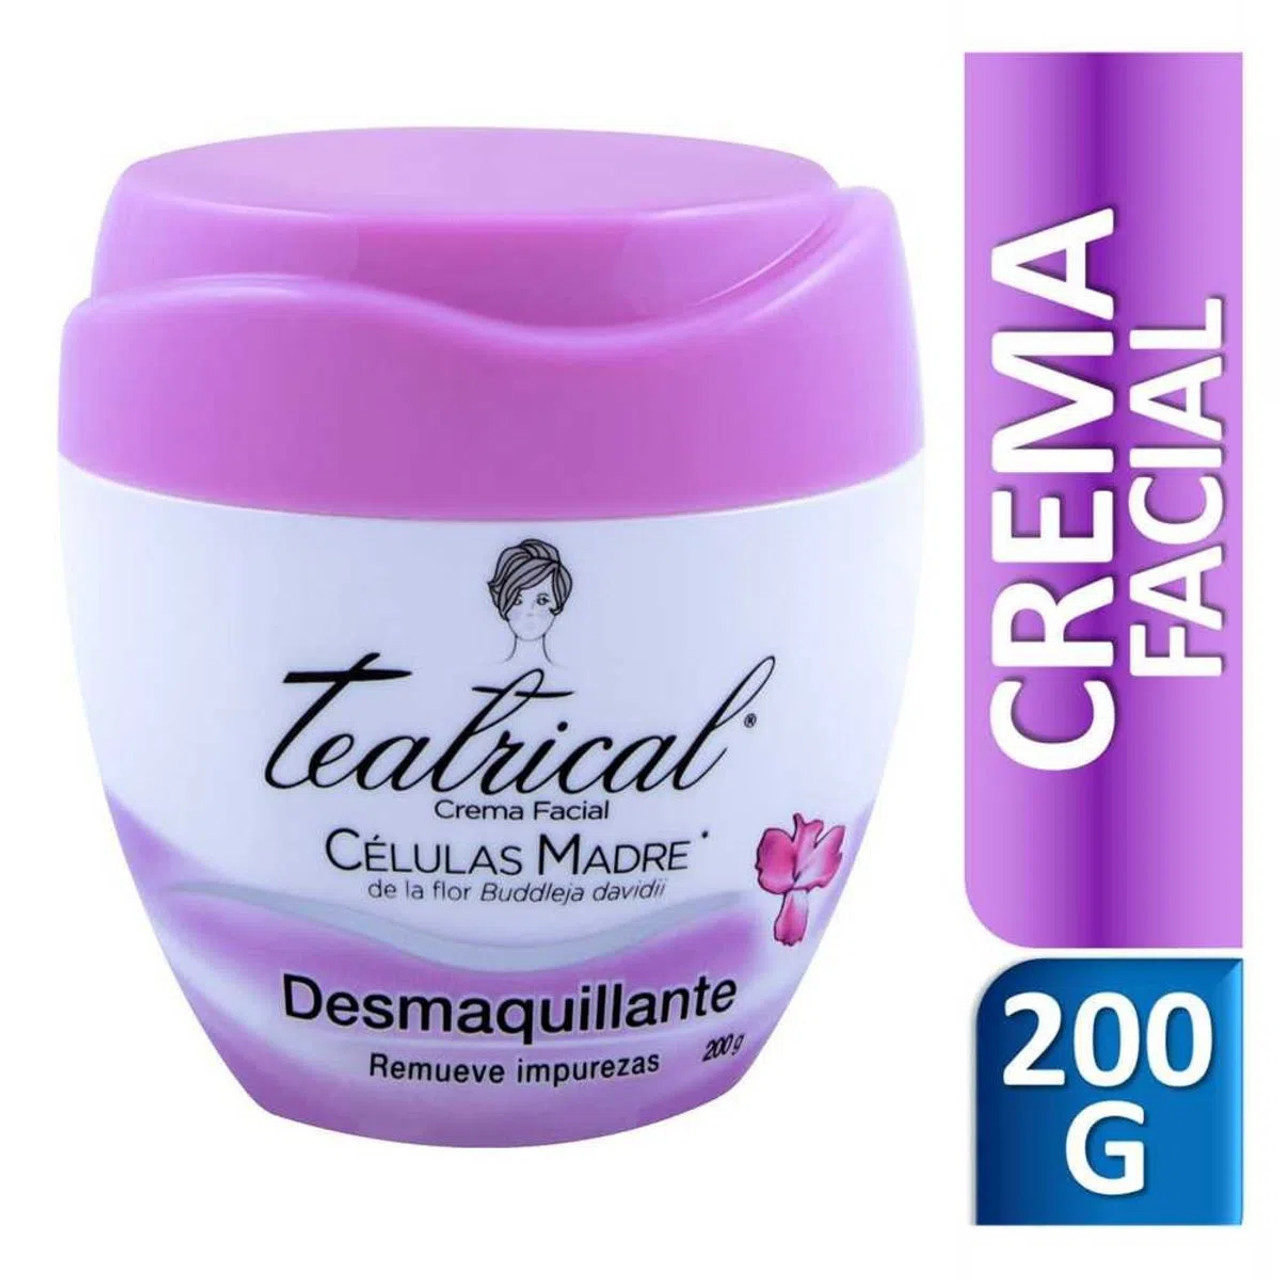 Teatrical Desmaquillante Crema Facial Moisturizer Face Cream Removes  Impurities, 200 g / 7.05 oz